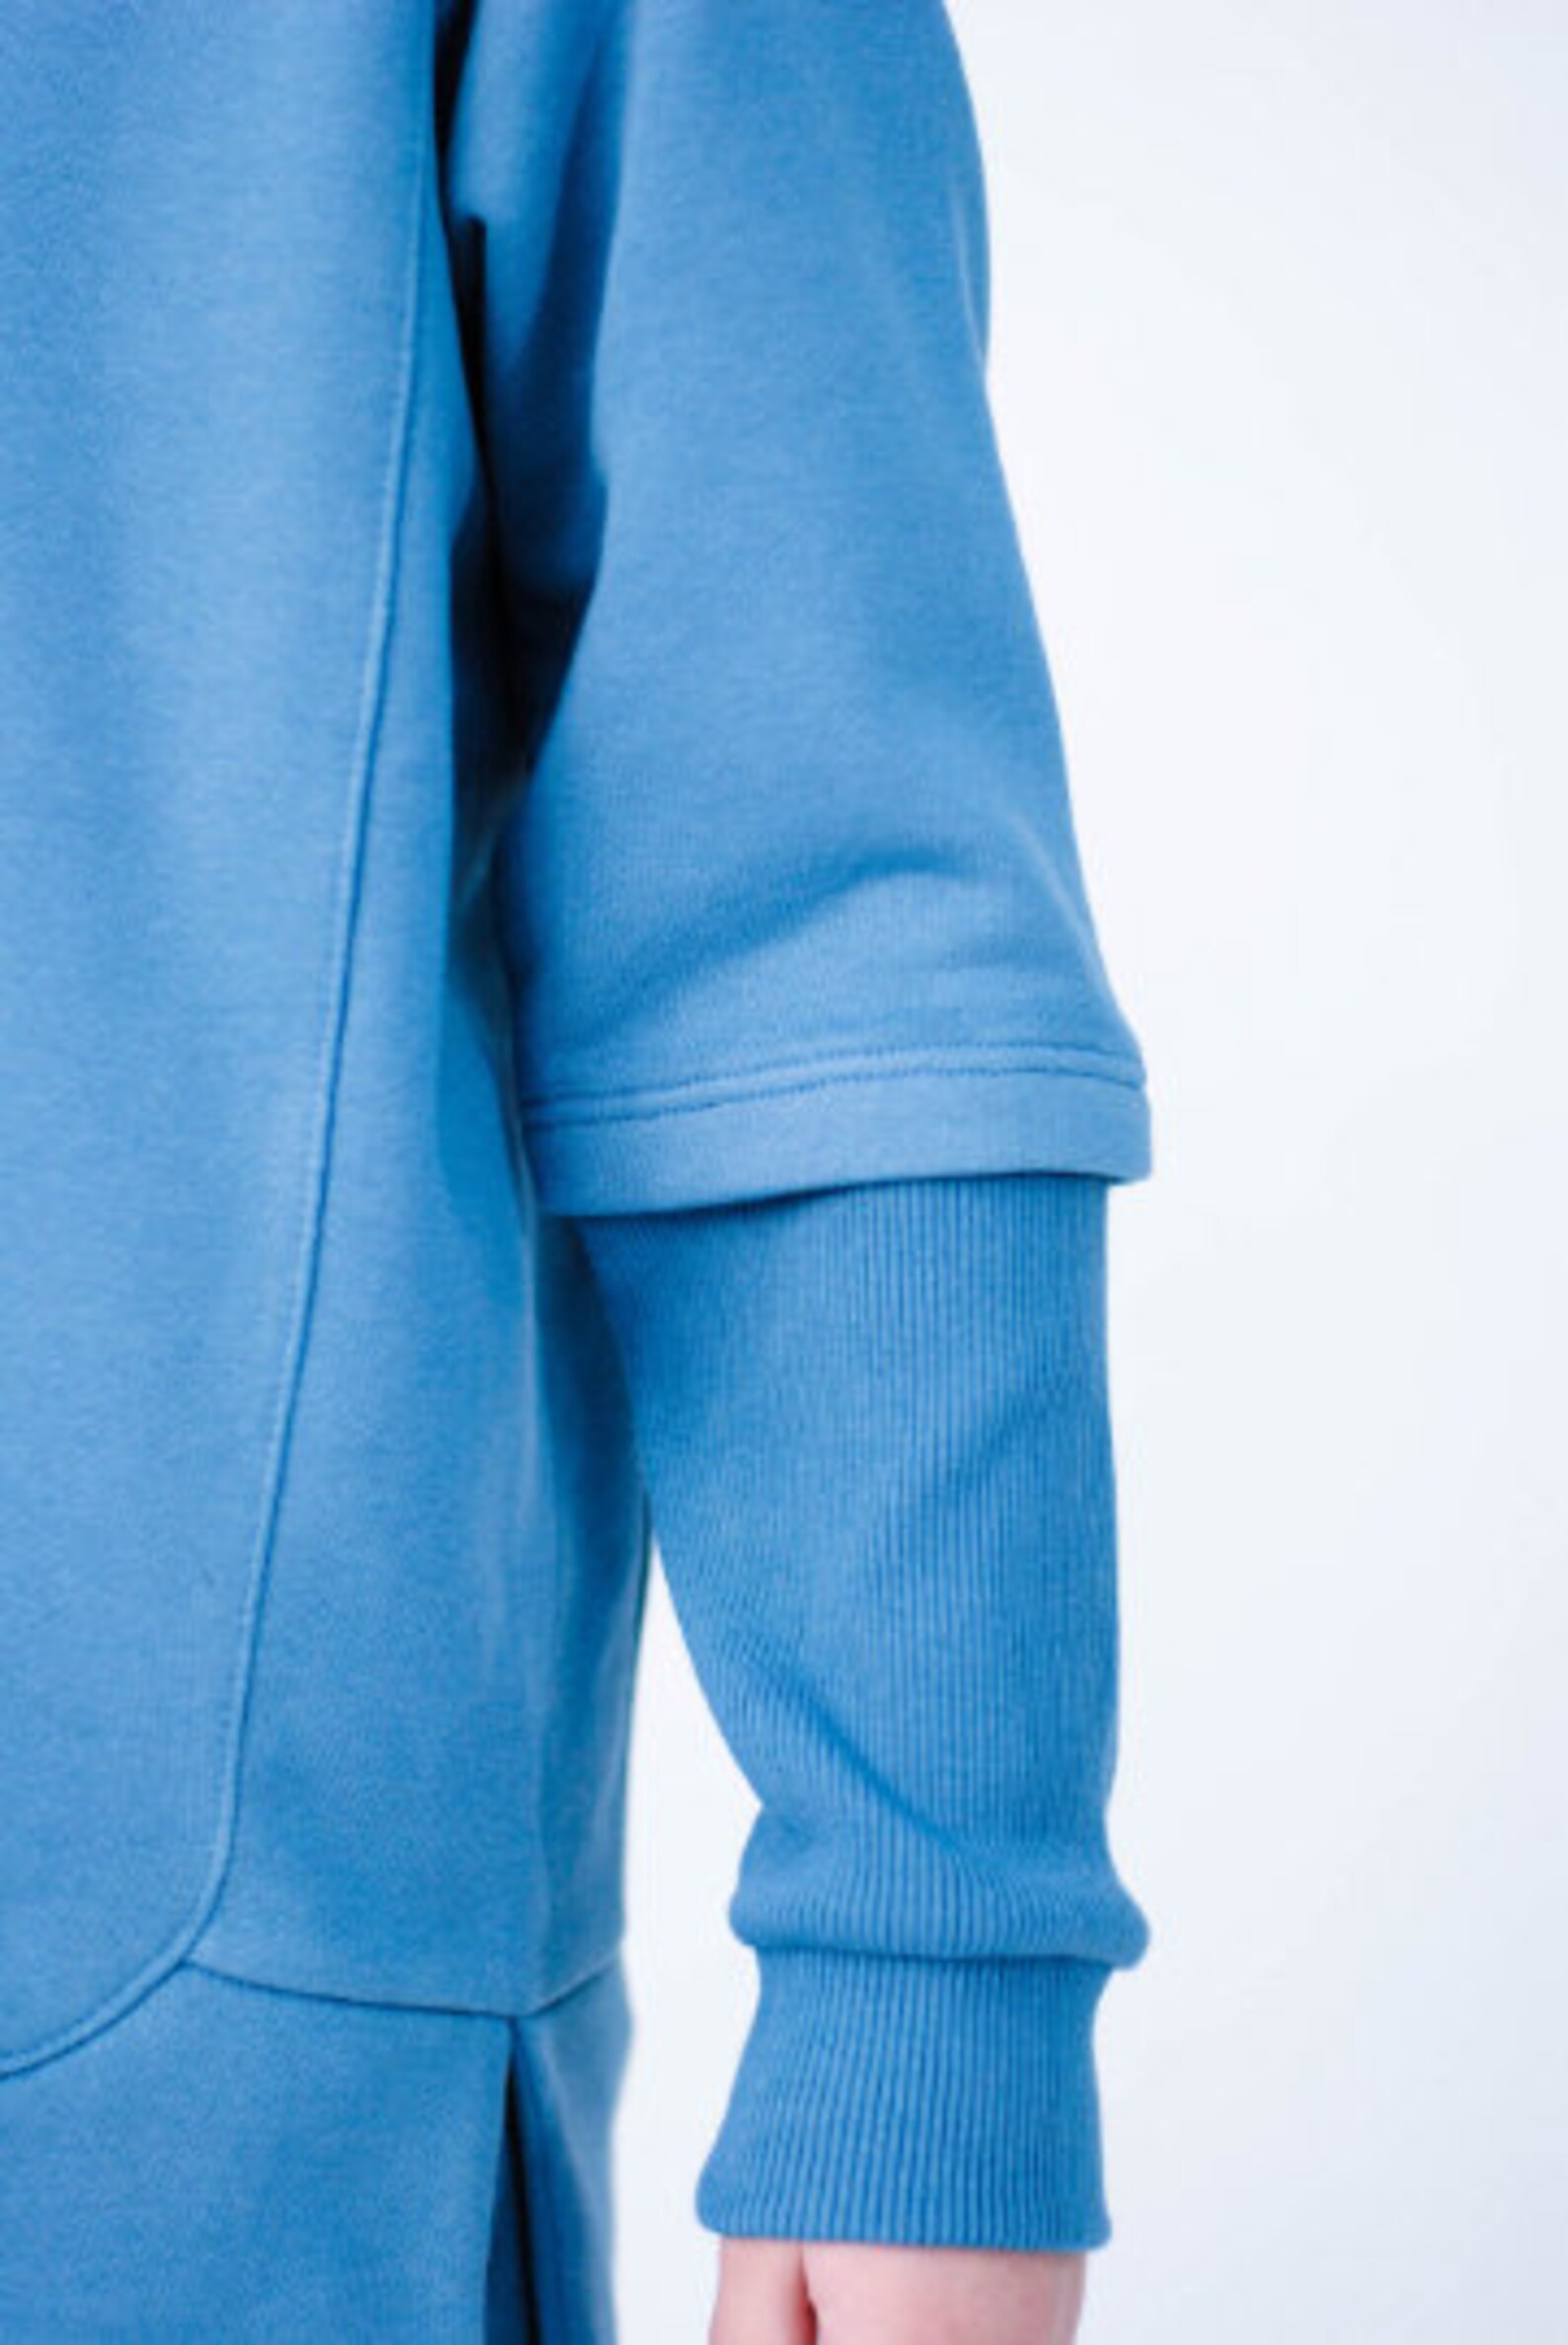 Crewneck sweatshirt sewing patterns Sweatshirt long sleeve | Etsy